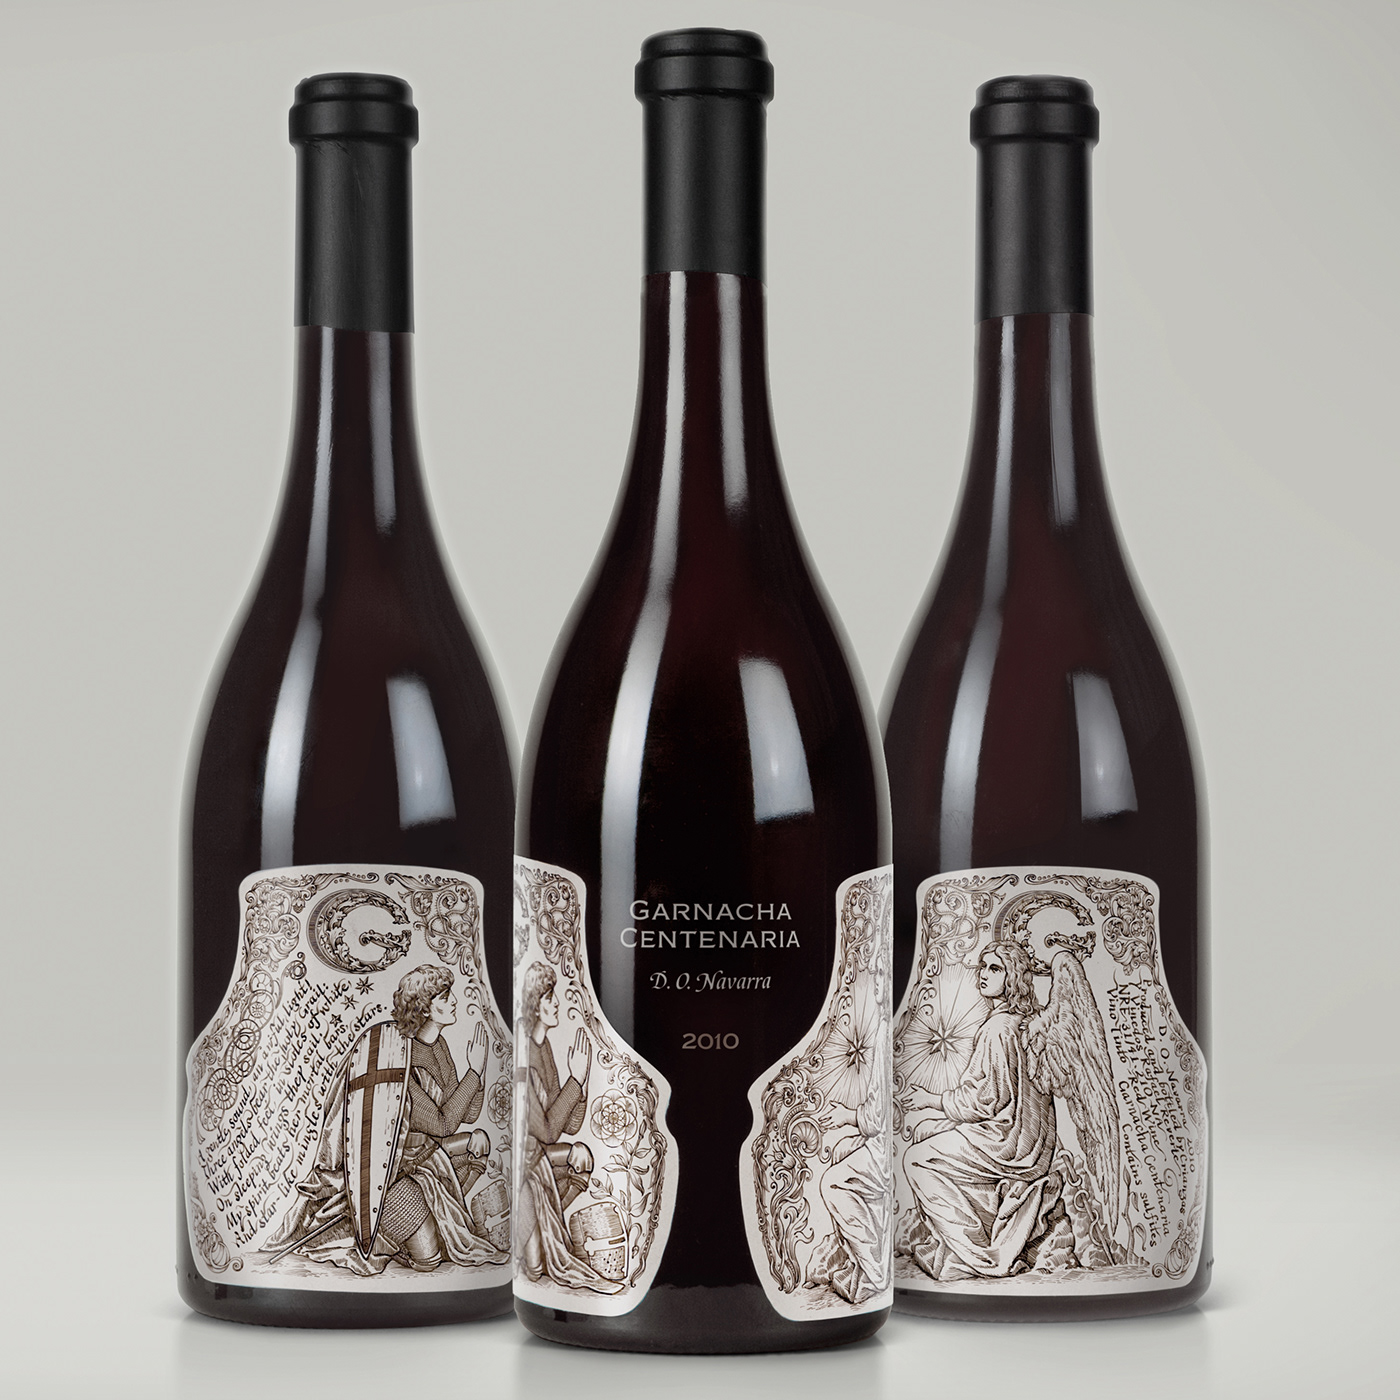 engraving brand wine design black and white graphic art wine label product label vintage Retro